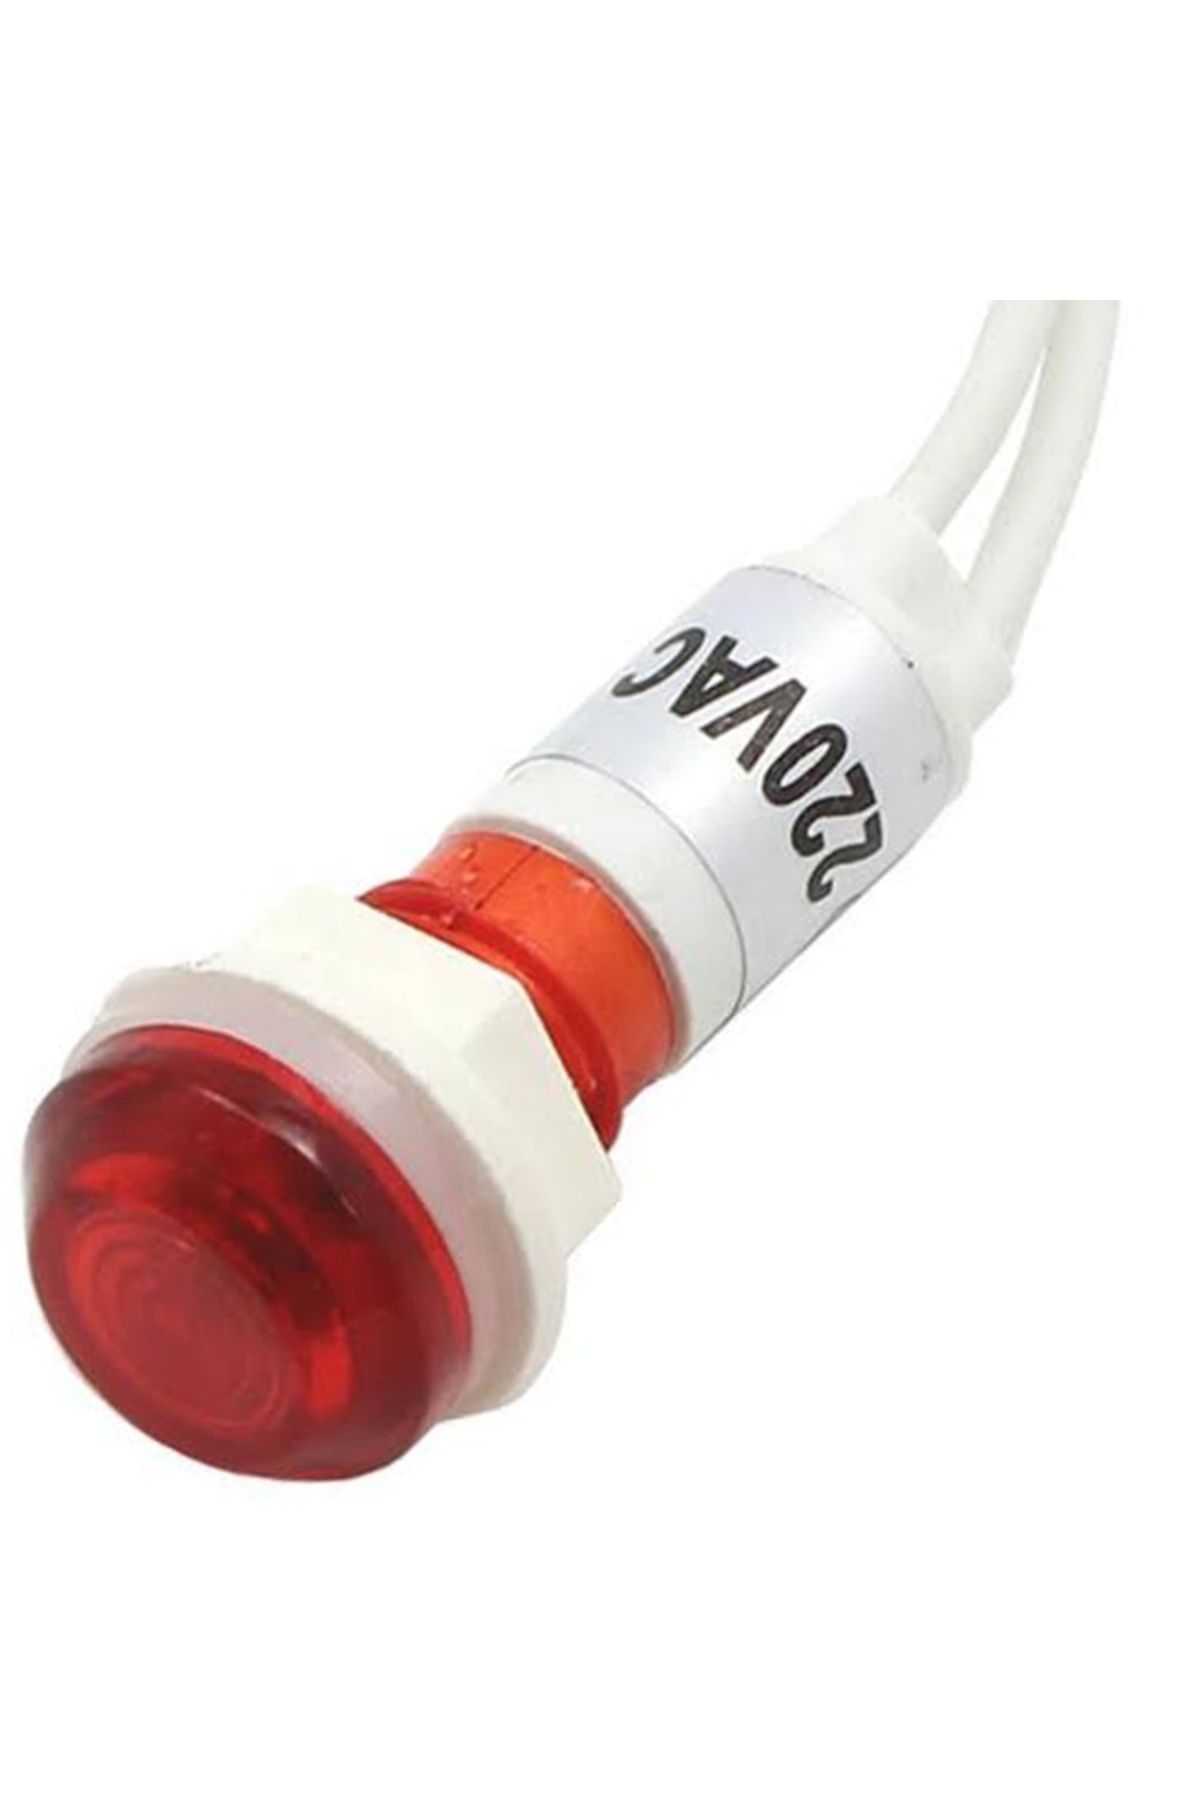 KRGZ 2020 Kablo Shopzumlu Sinyal Lambası Plastik 10 Mm Xd10-6w (ıc-227)